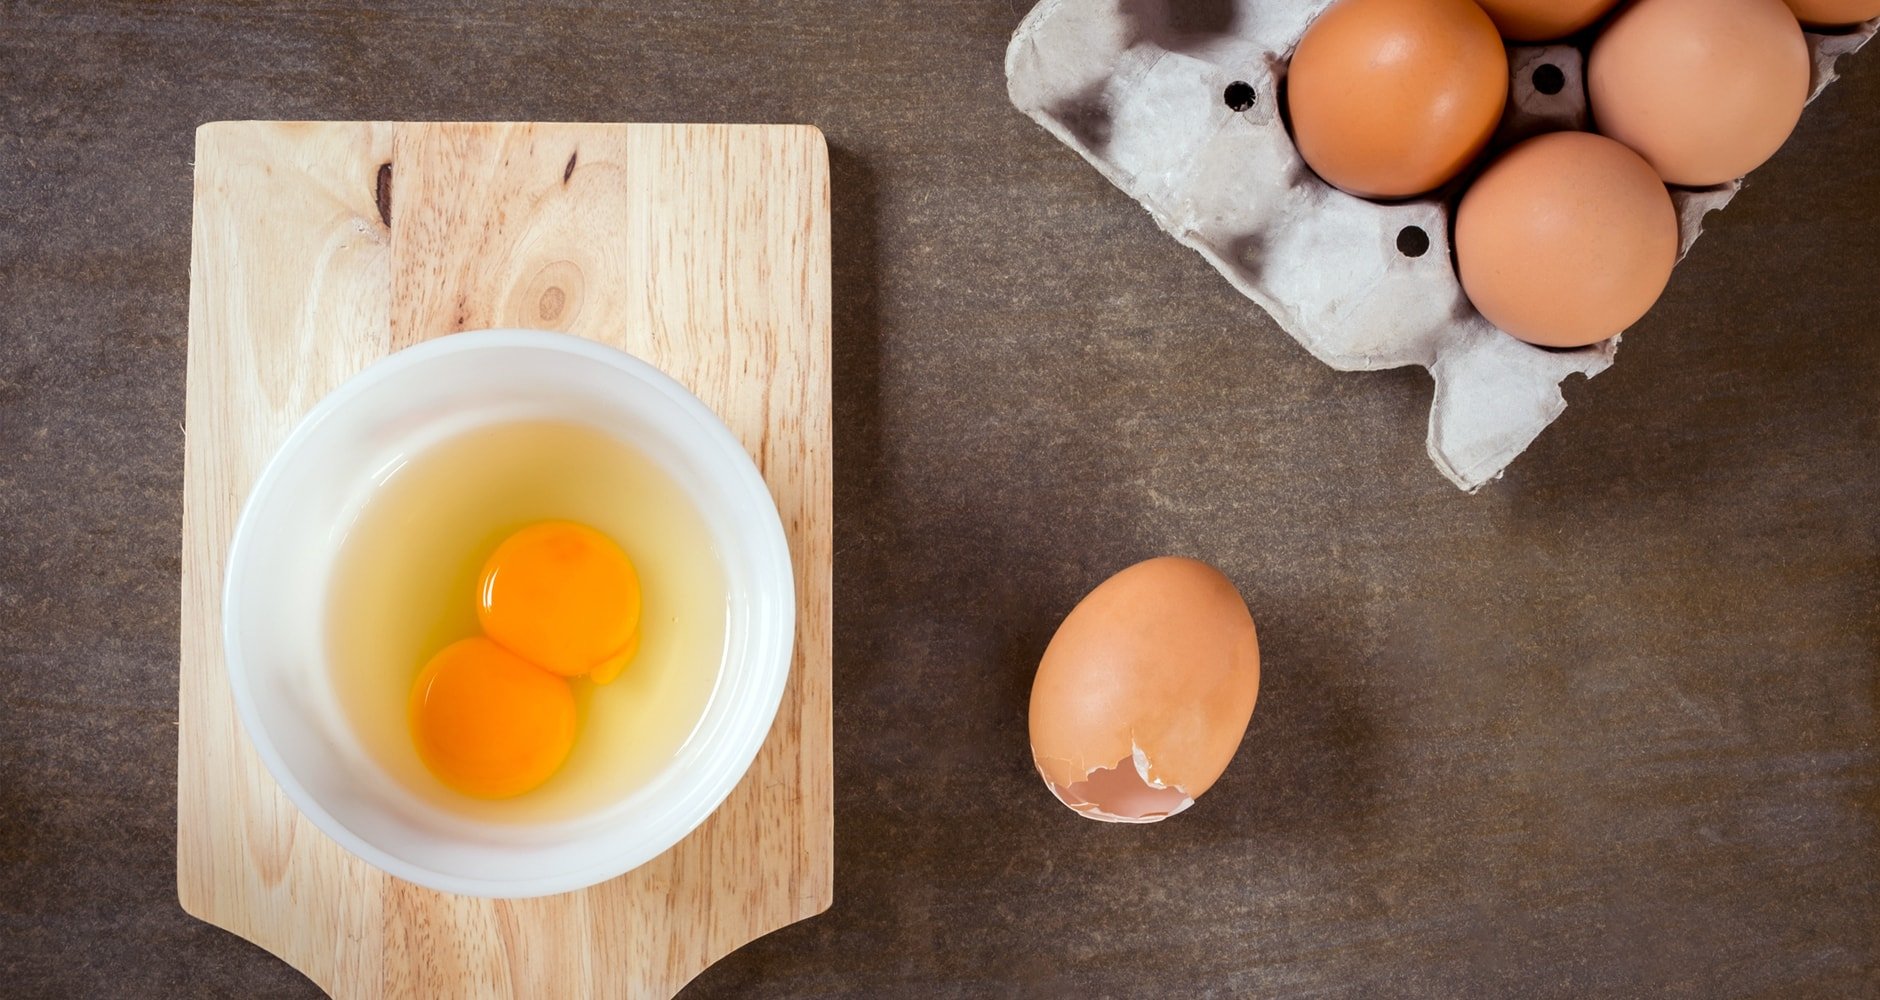 https://www.farmersalmanac.com/wp-content/uploads/2020/11/Food-Superstition-Two-Yolk-Egg-i518585906.jpeg